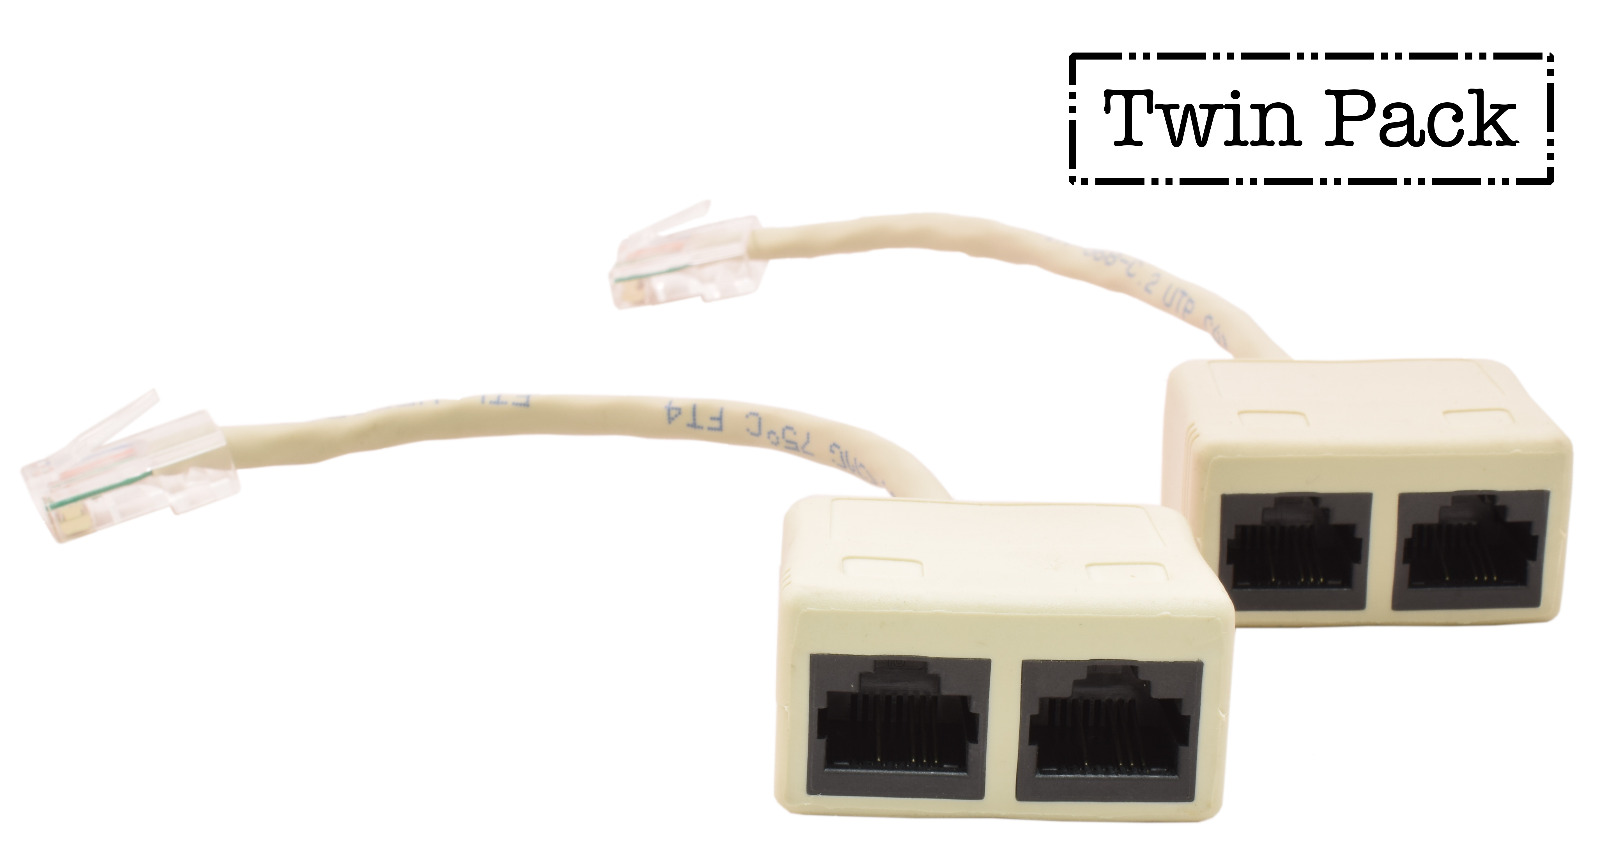 PTC Premium RJ45 Network Combiner Adapter | Twin Pack